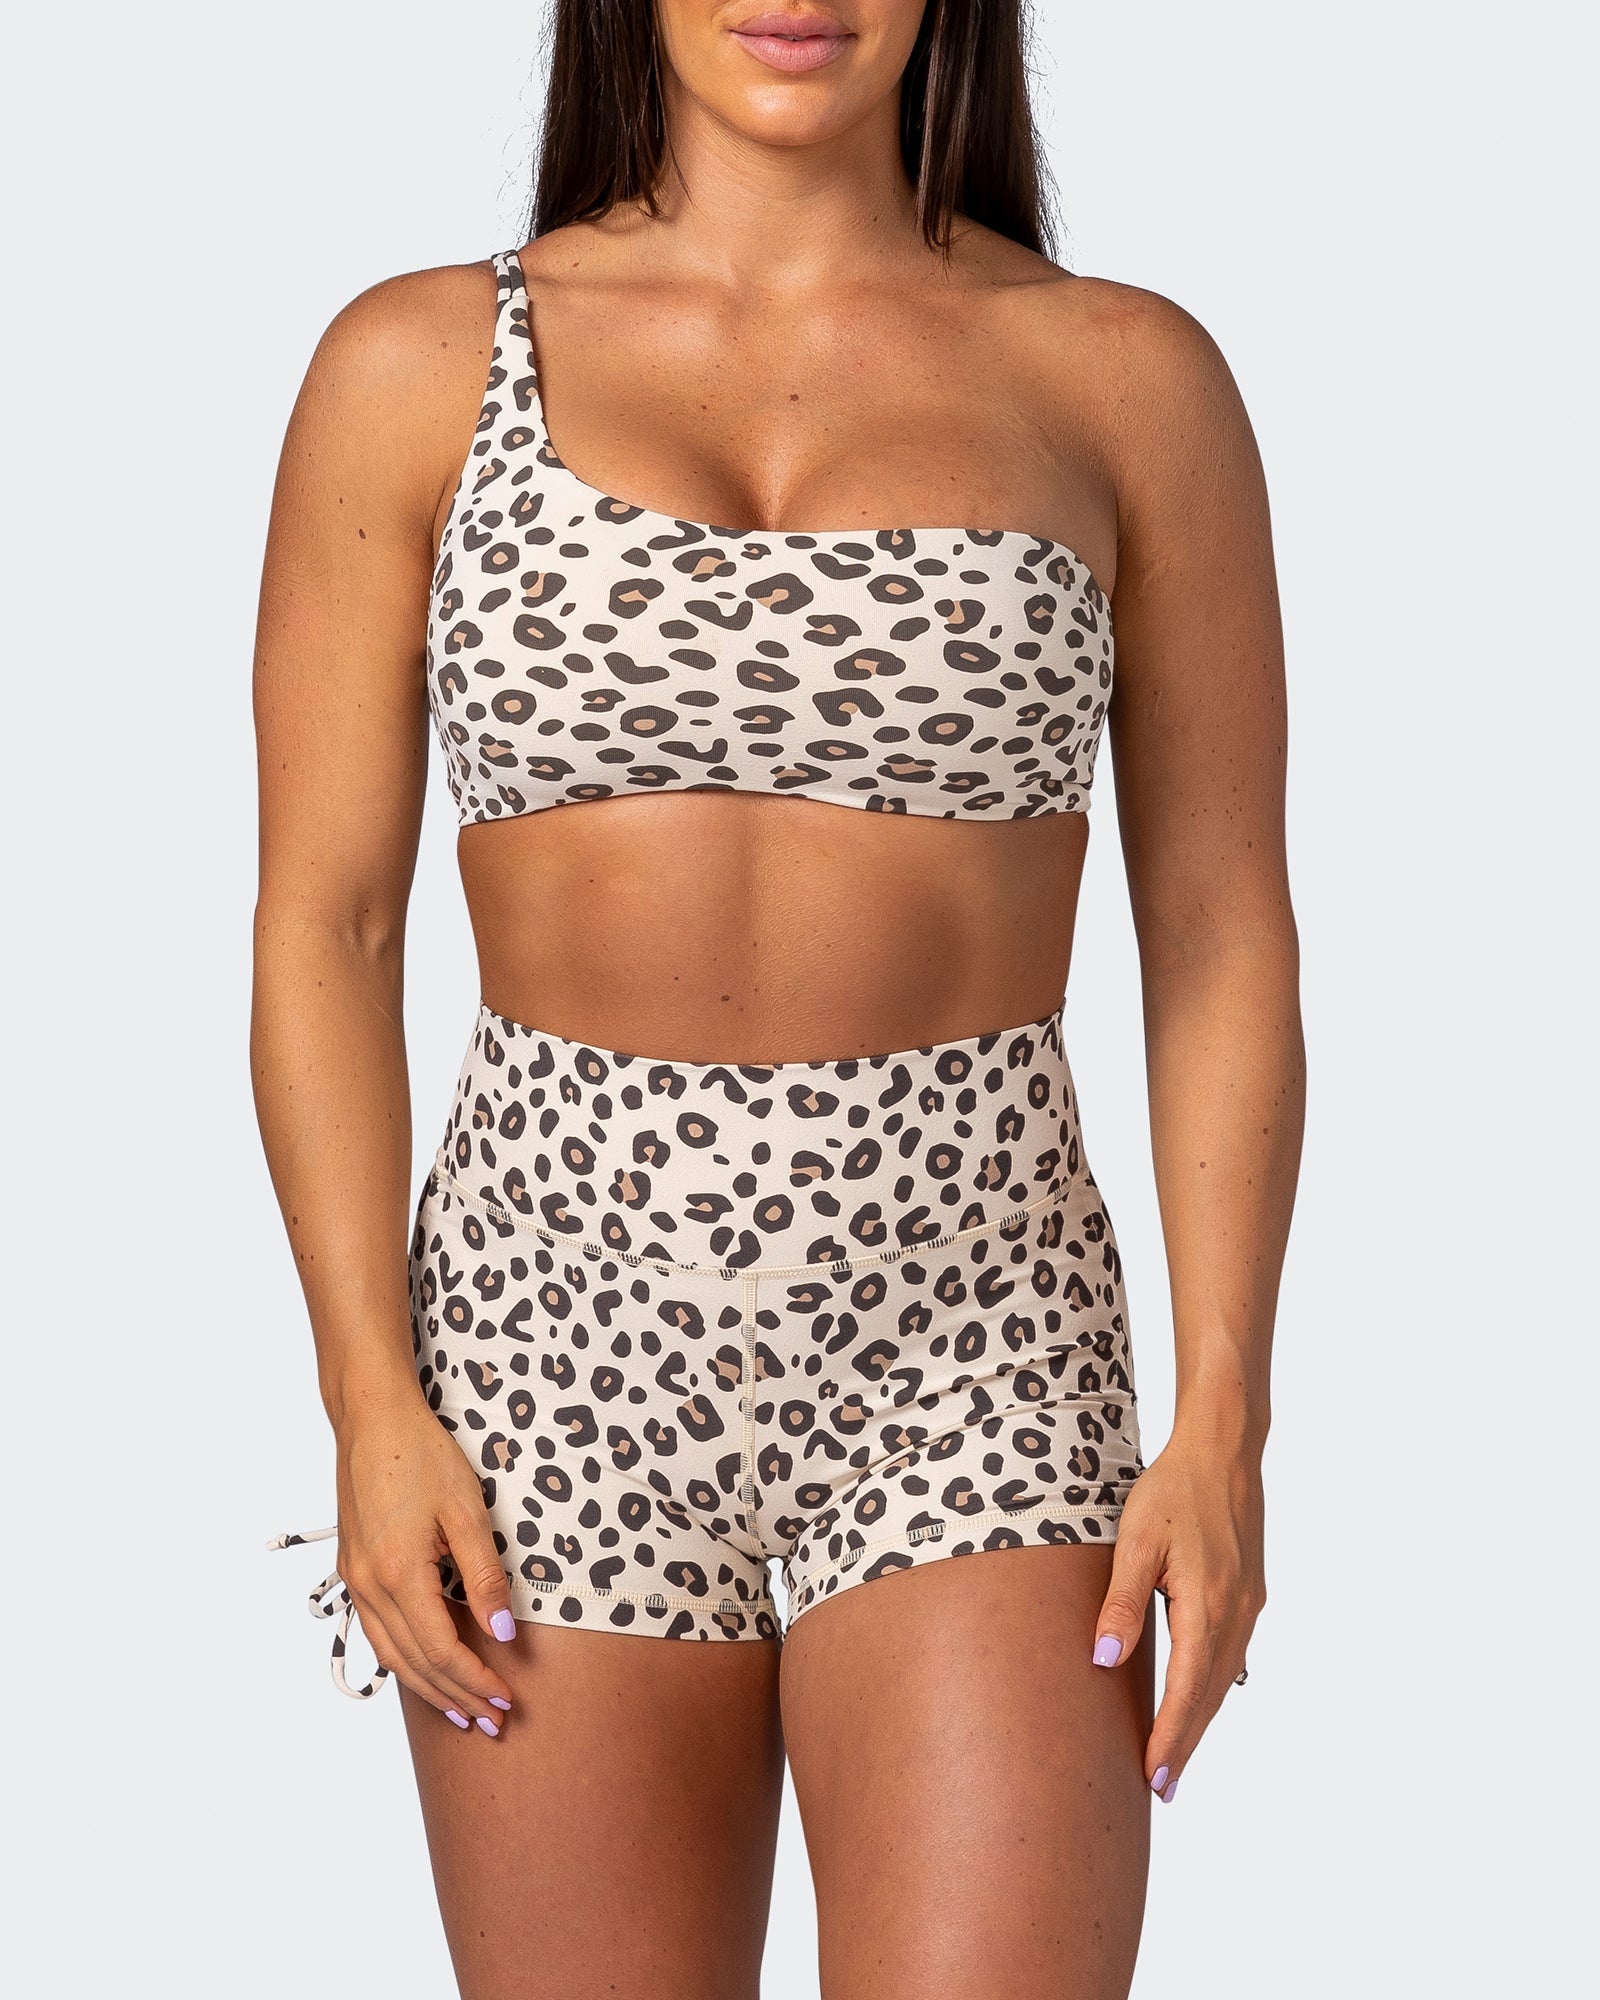 musclenation Sports Bras Movement One Shoulder Bralette - Cheetah Print